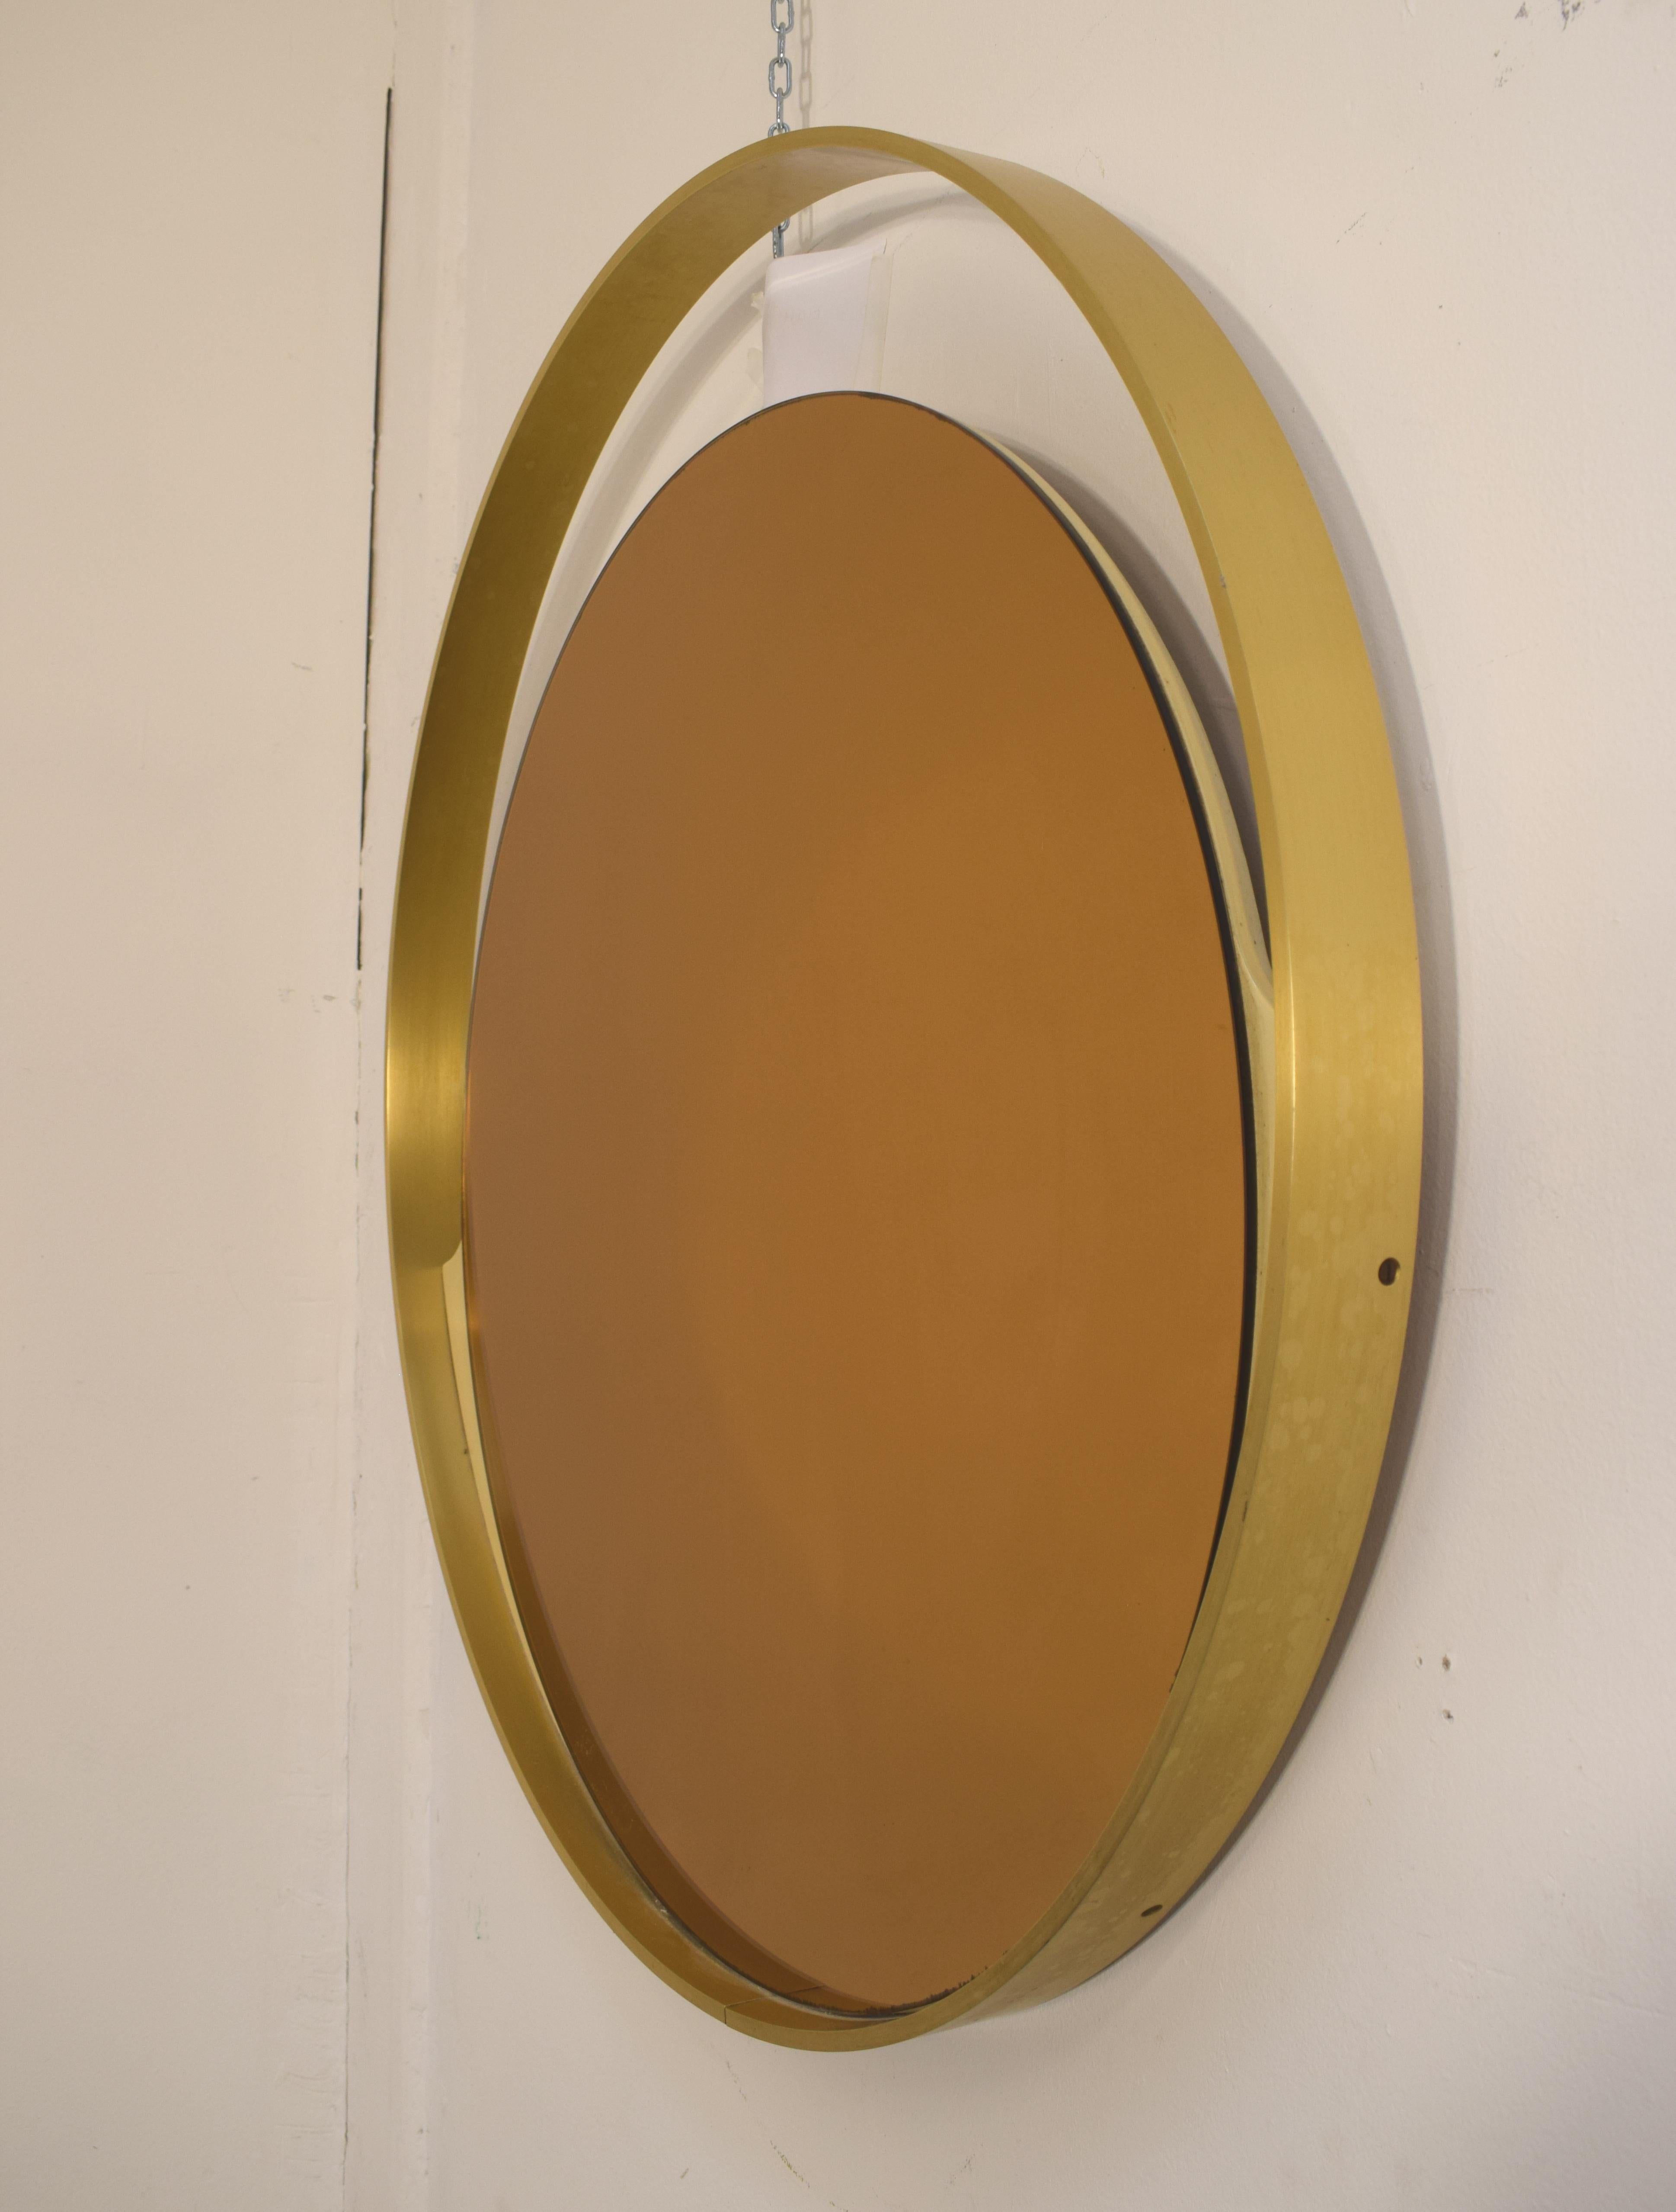 Italian round brass mirror, 1960s.

Dimensions: D= 80 cm; D= 5 cm.